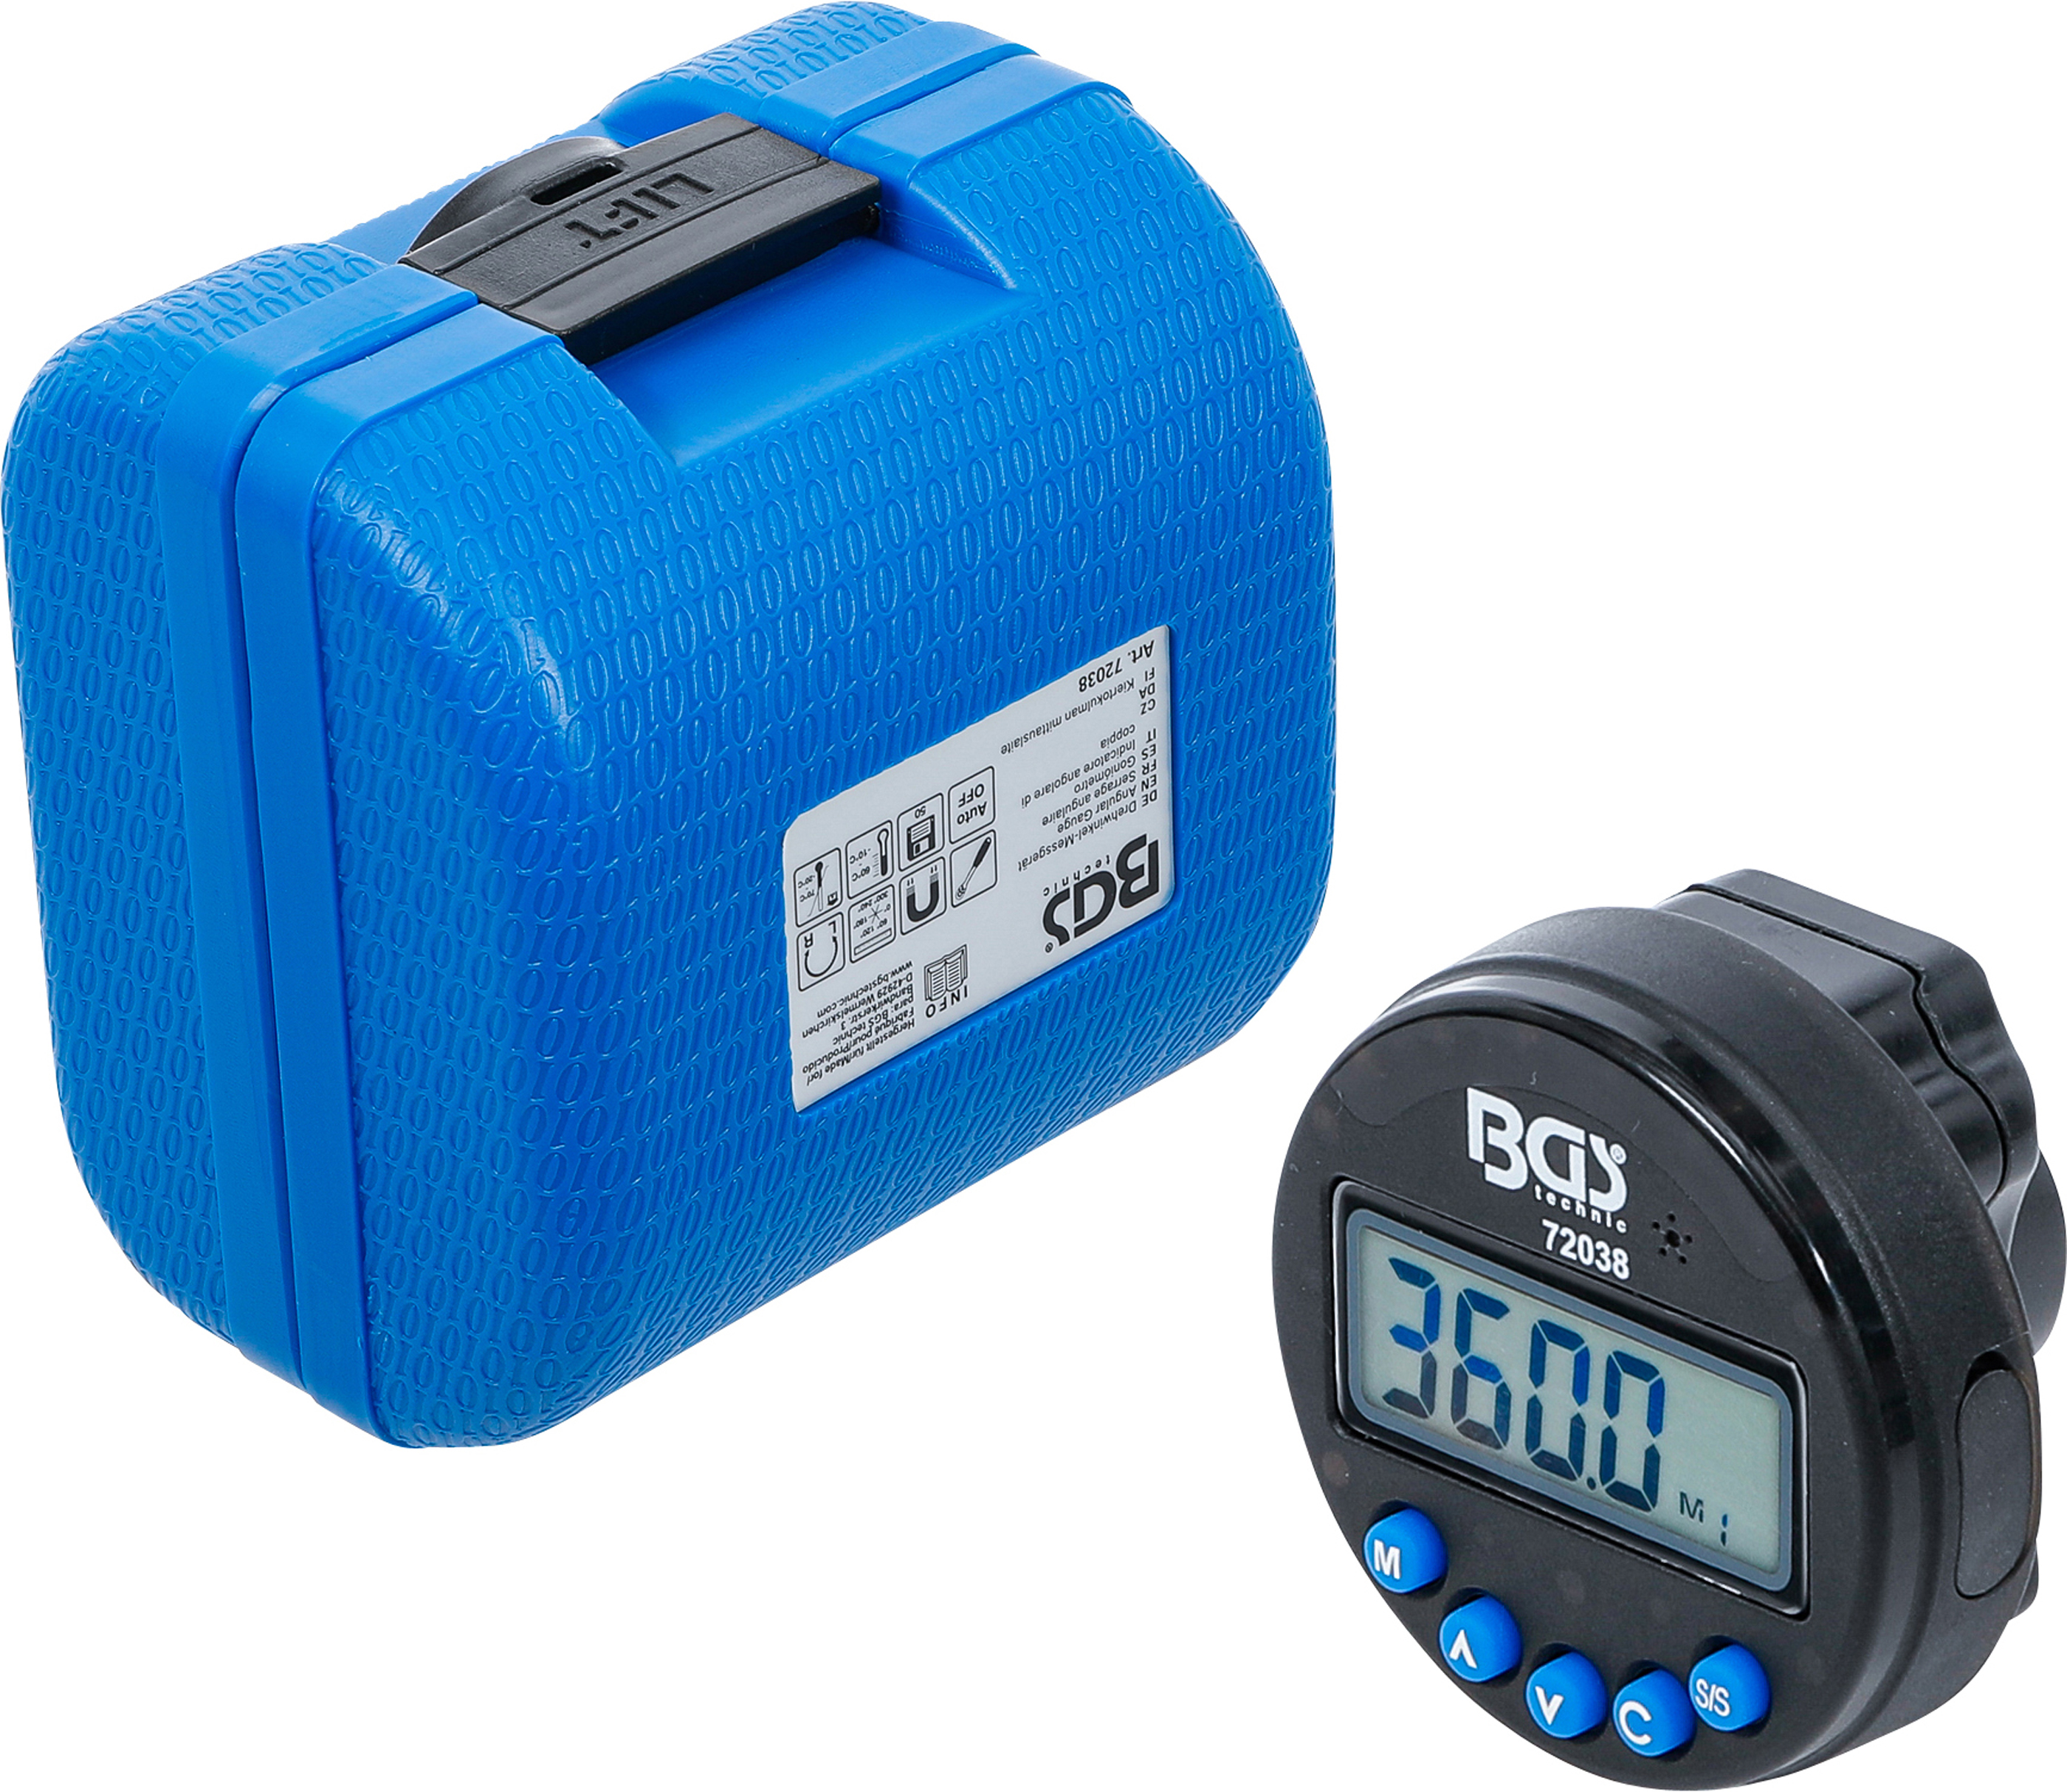 BGS Drehwinkel-Messgerät | digital | mit Magnet